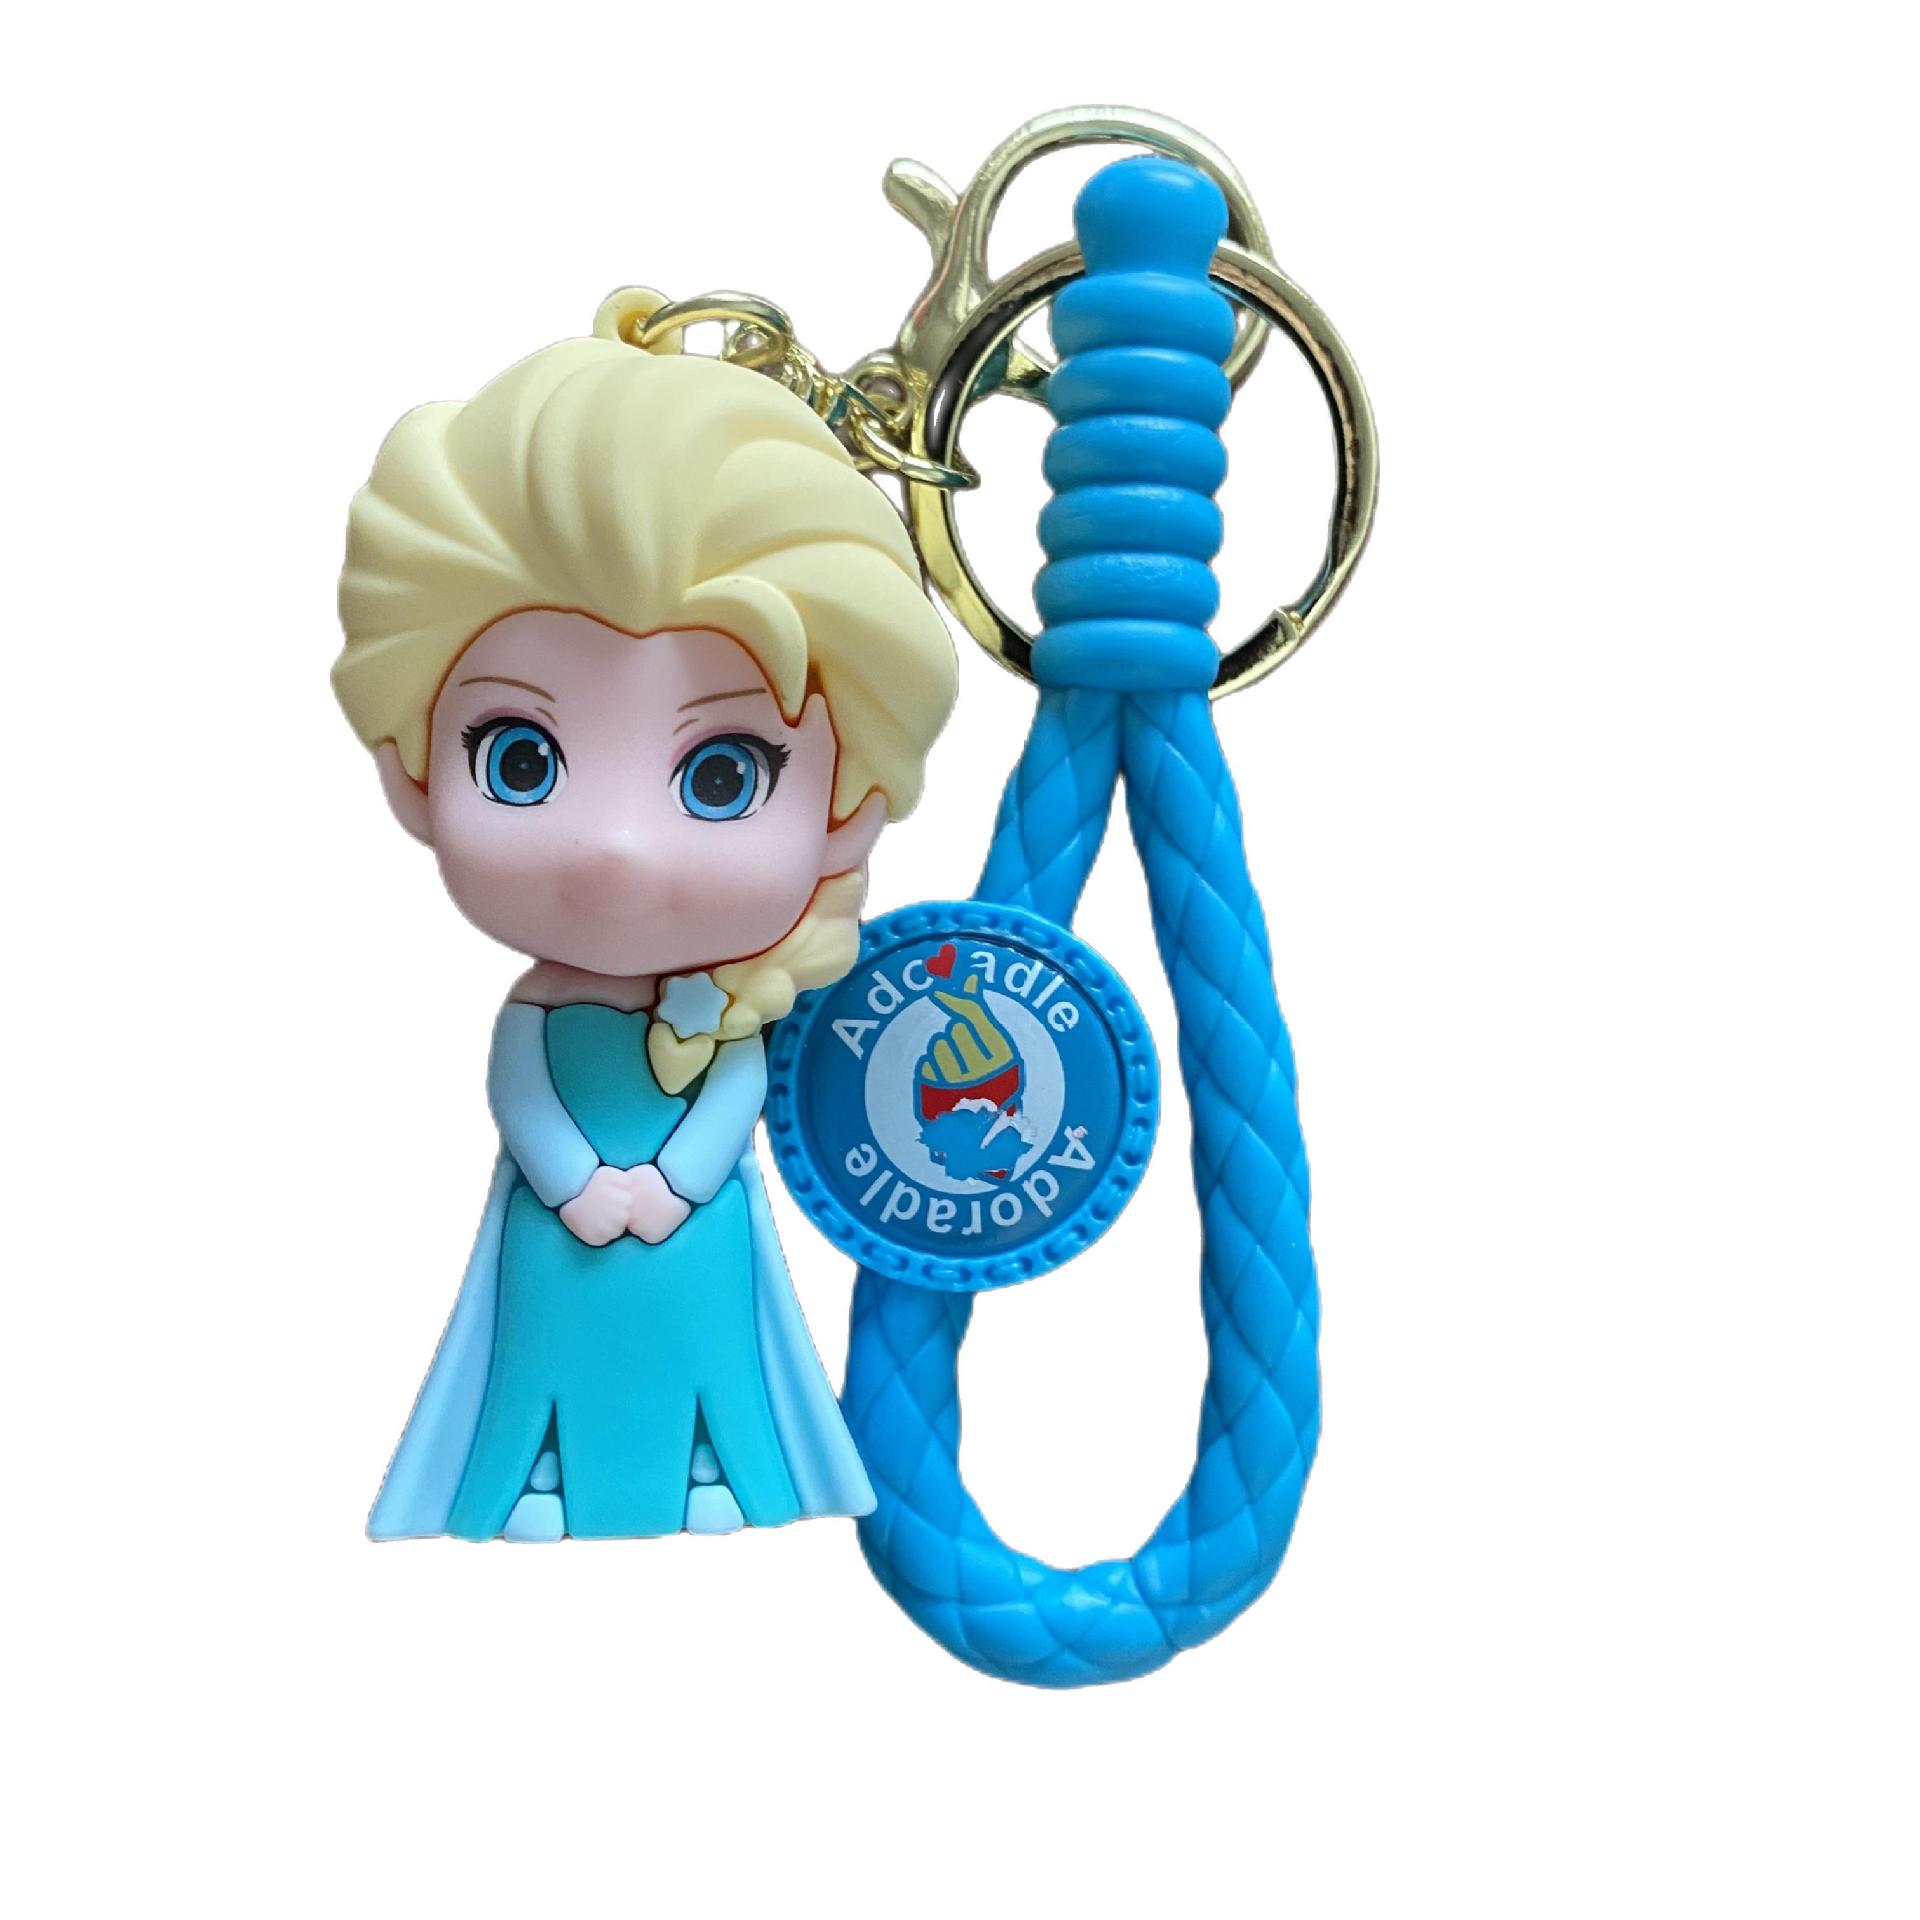 New Frozen Cartoon Doll Keychain Cute Aisha Princess Bag Package Pendant Car Key Chain Wholesale